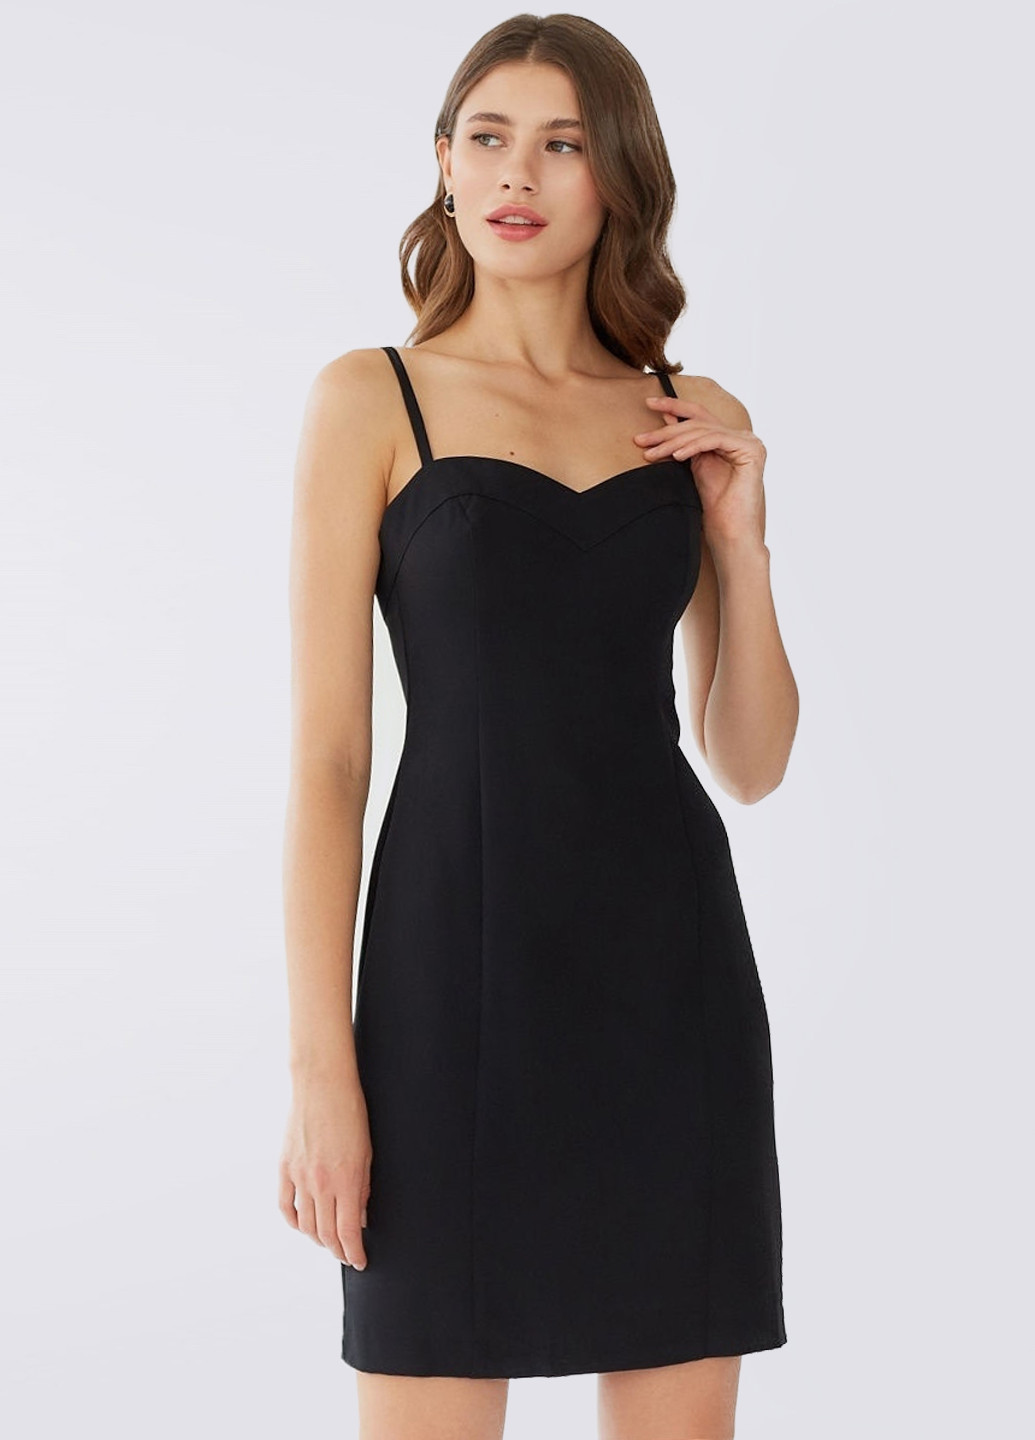 Черное коктейльное платье футляр мини футляр Egostyle однотонное